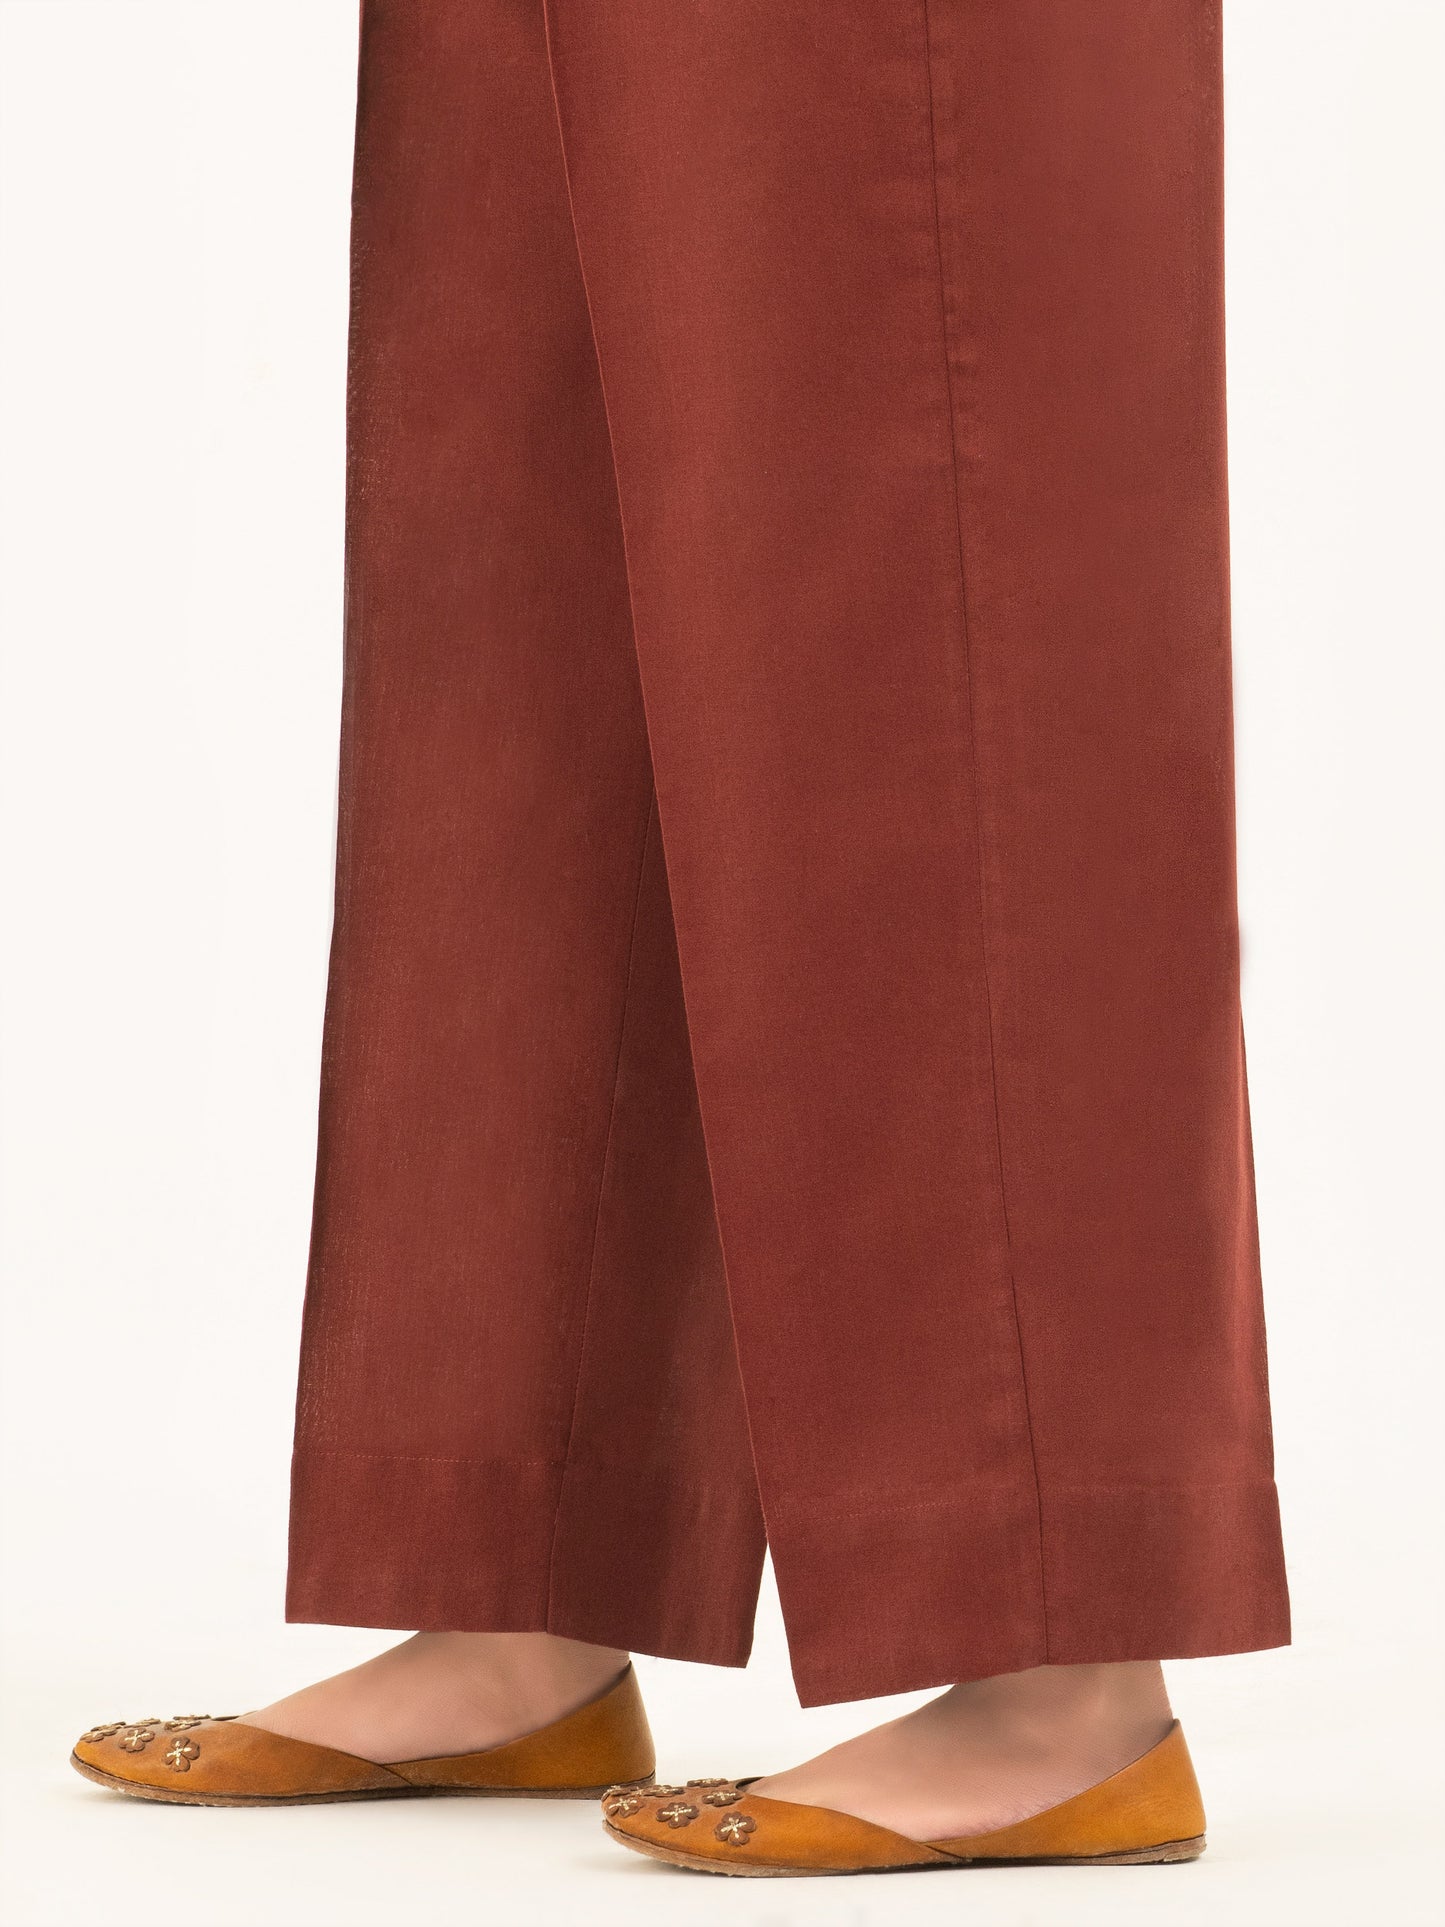 Dyed Khaddar Trousers(Pret)